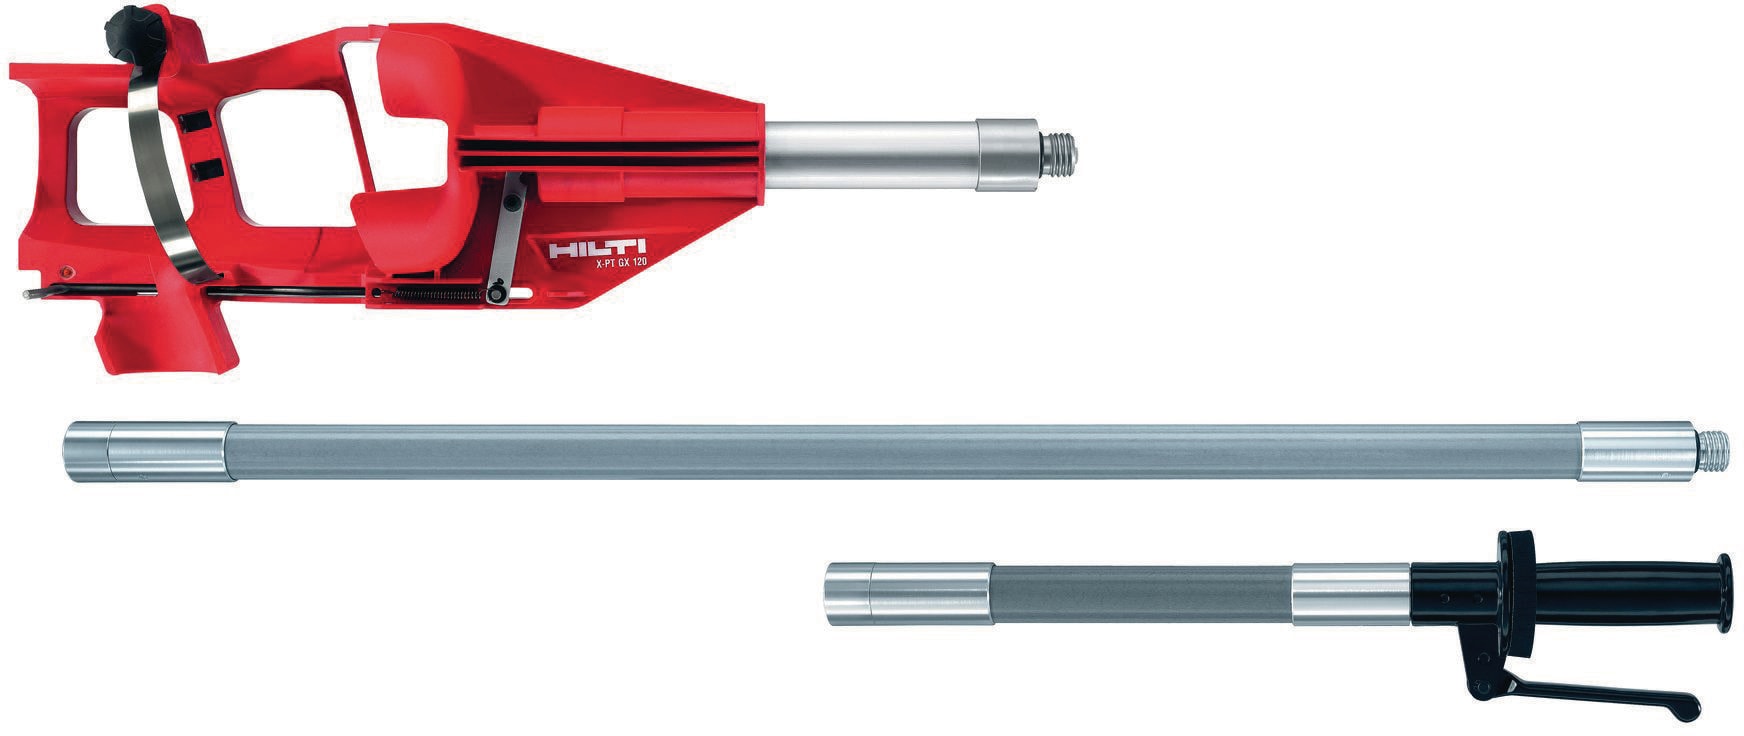 Modular pole tool X-PT GX 120 - Pole Tools - Hilti USA